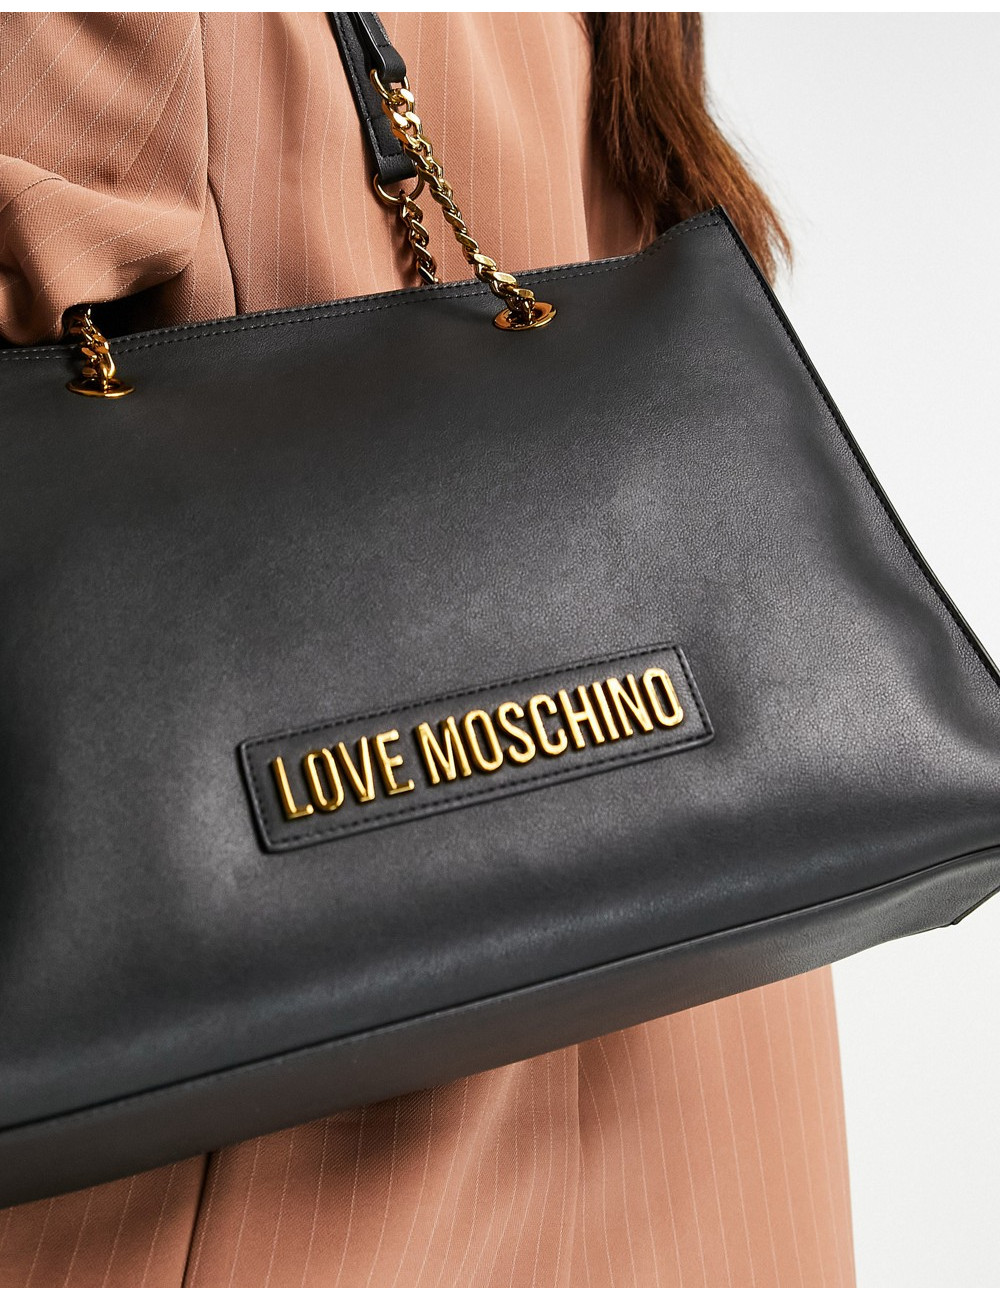 Love Moschino logo tote bag...